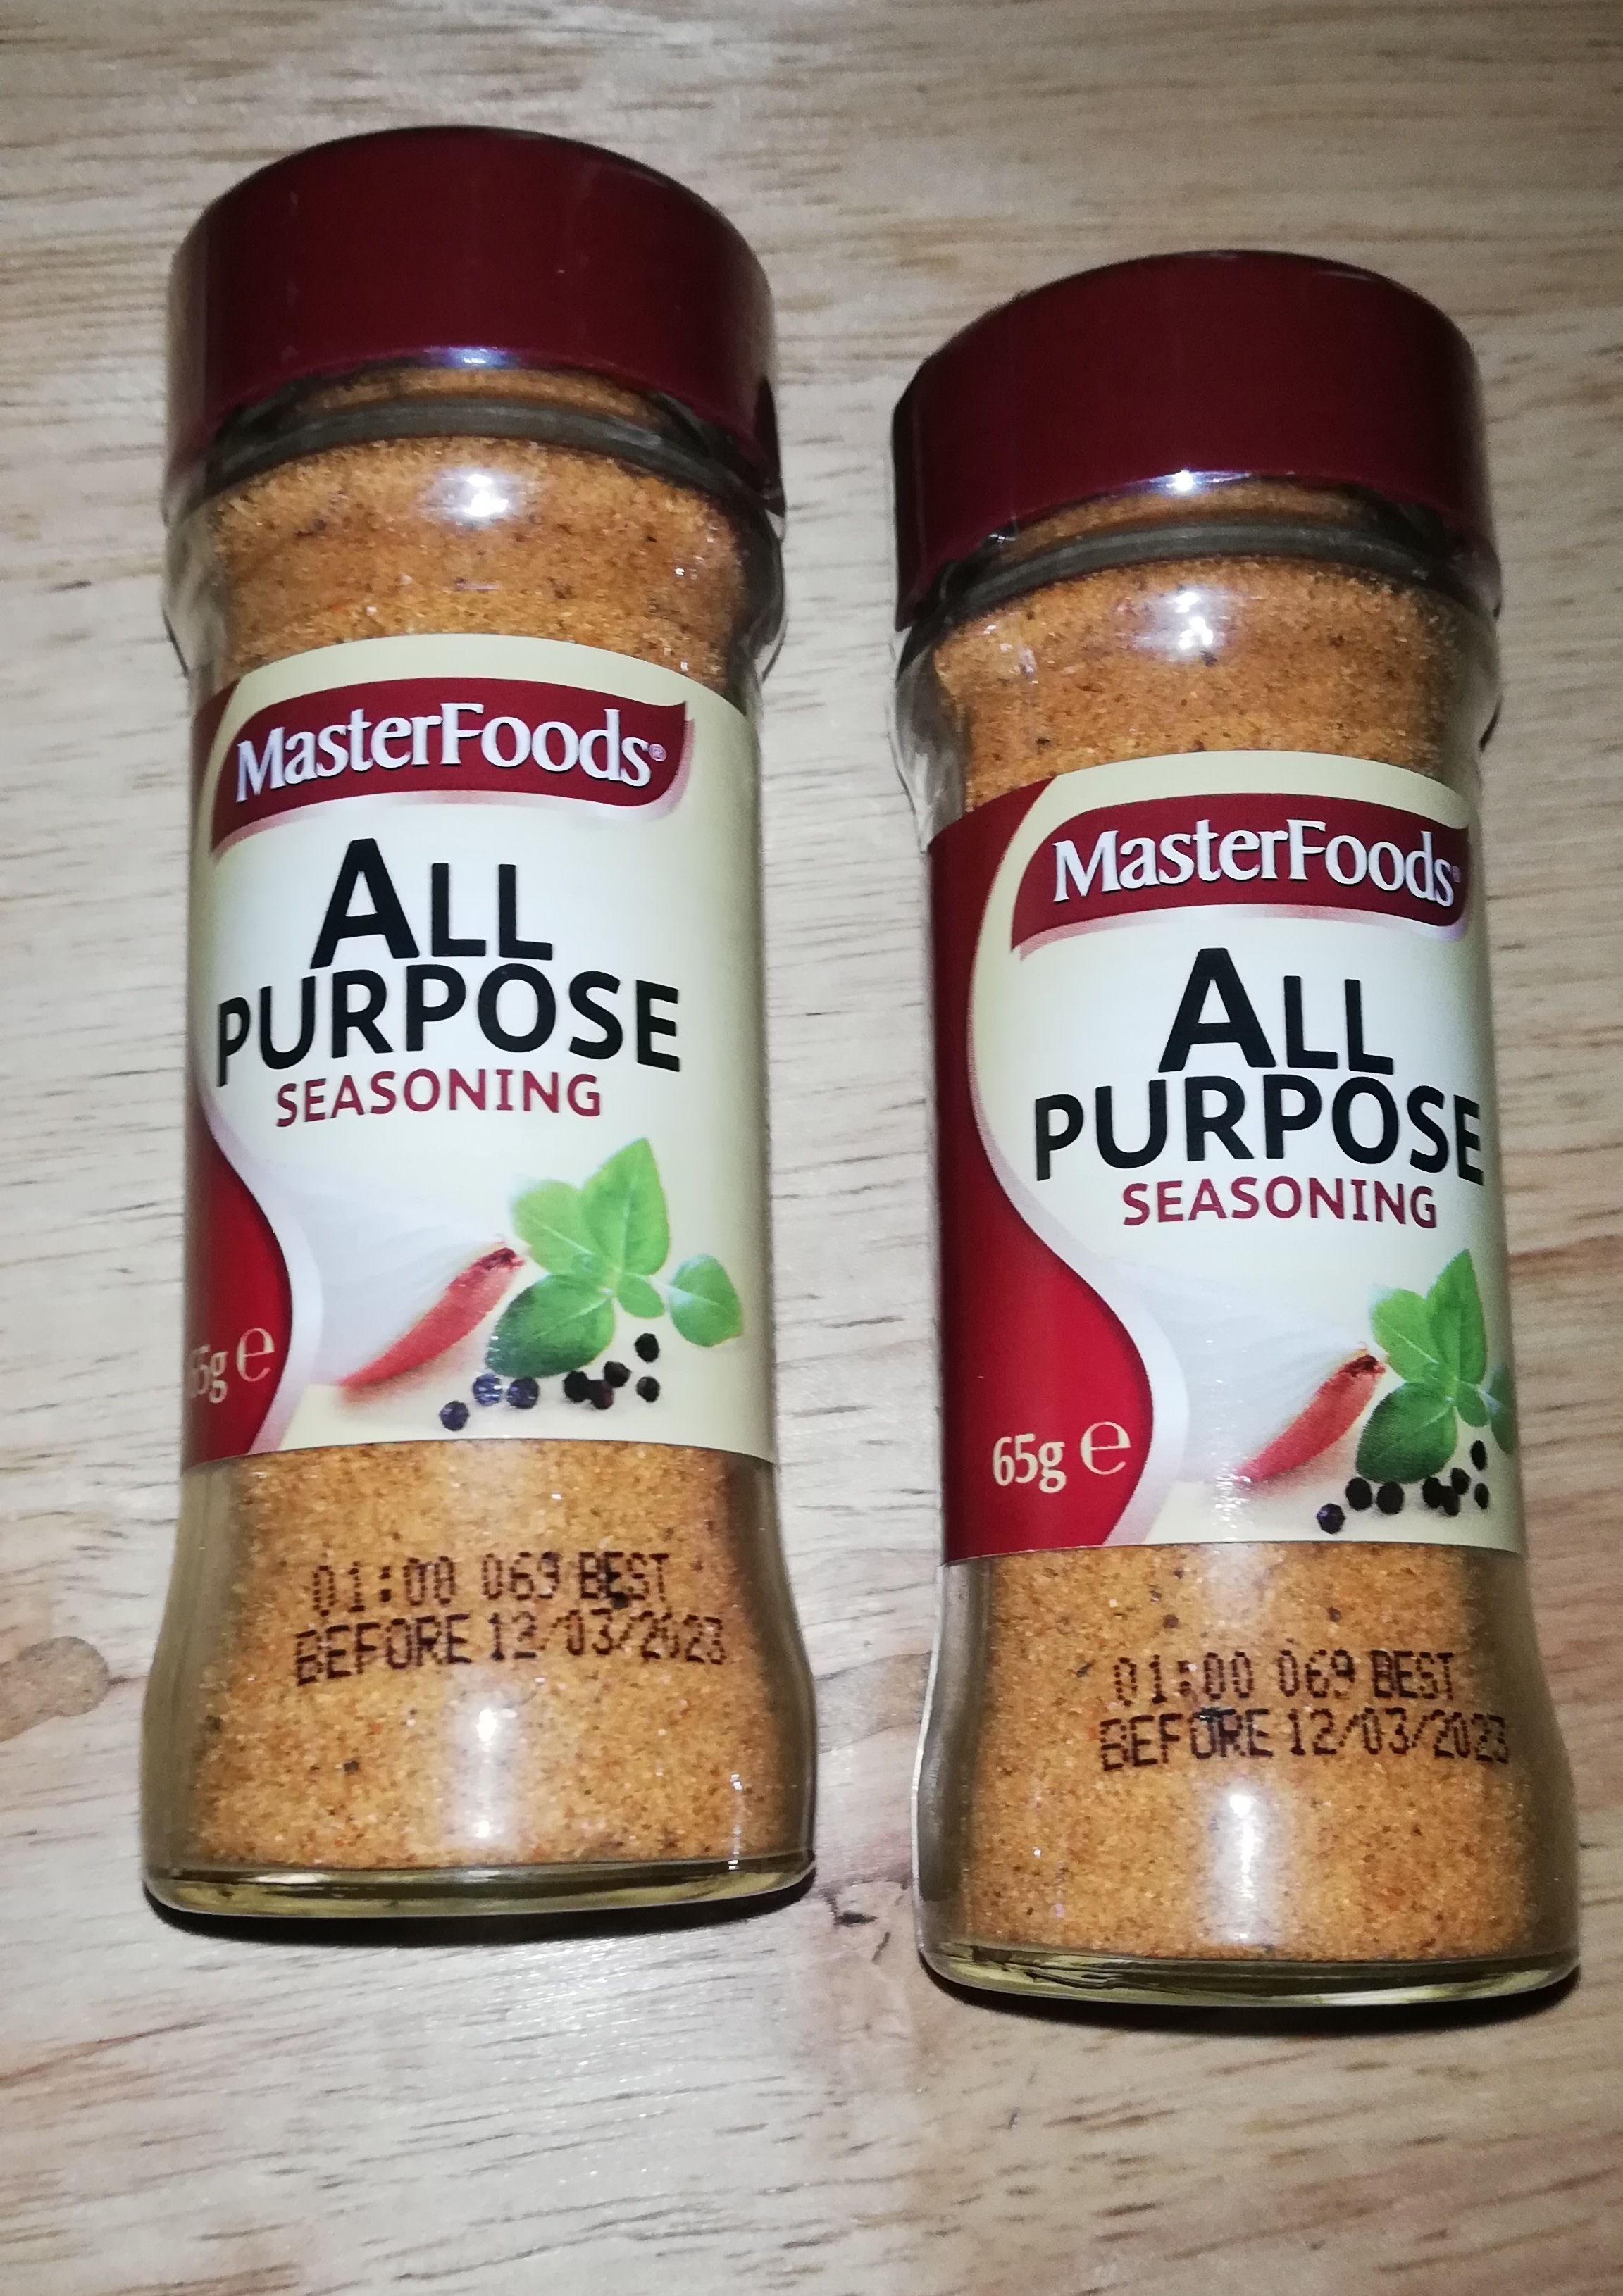 Buy MasterFoods Chicken Salt Seasoning 65g